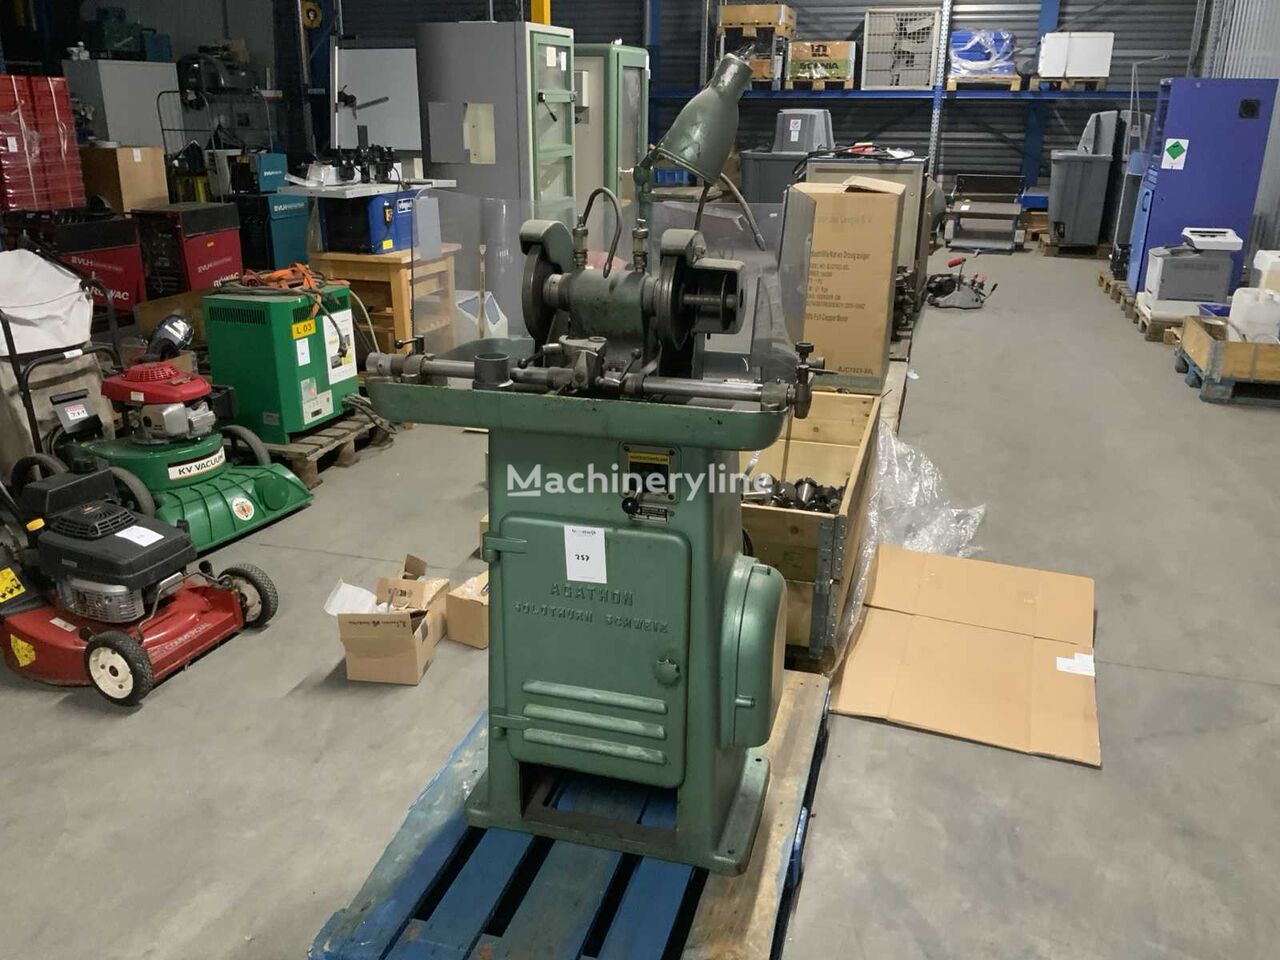 Agathon 175A sharpening machine